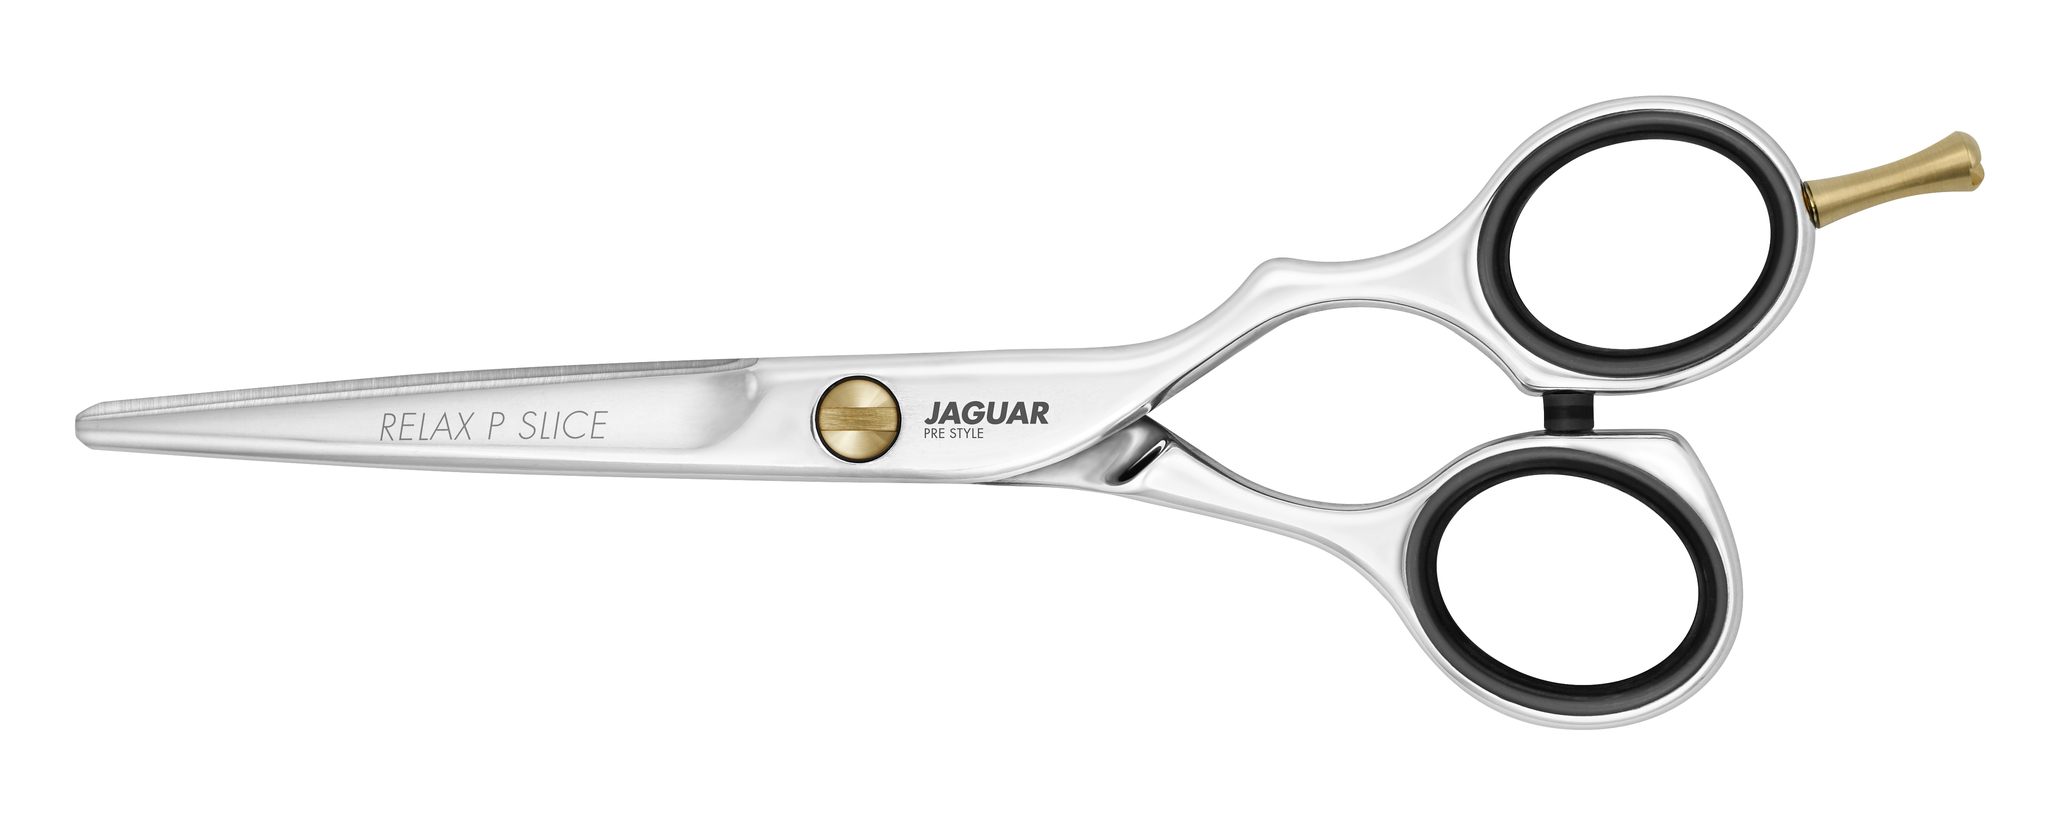 Jaguar Pre Style Relax P Slice 6.0